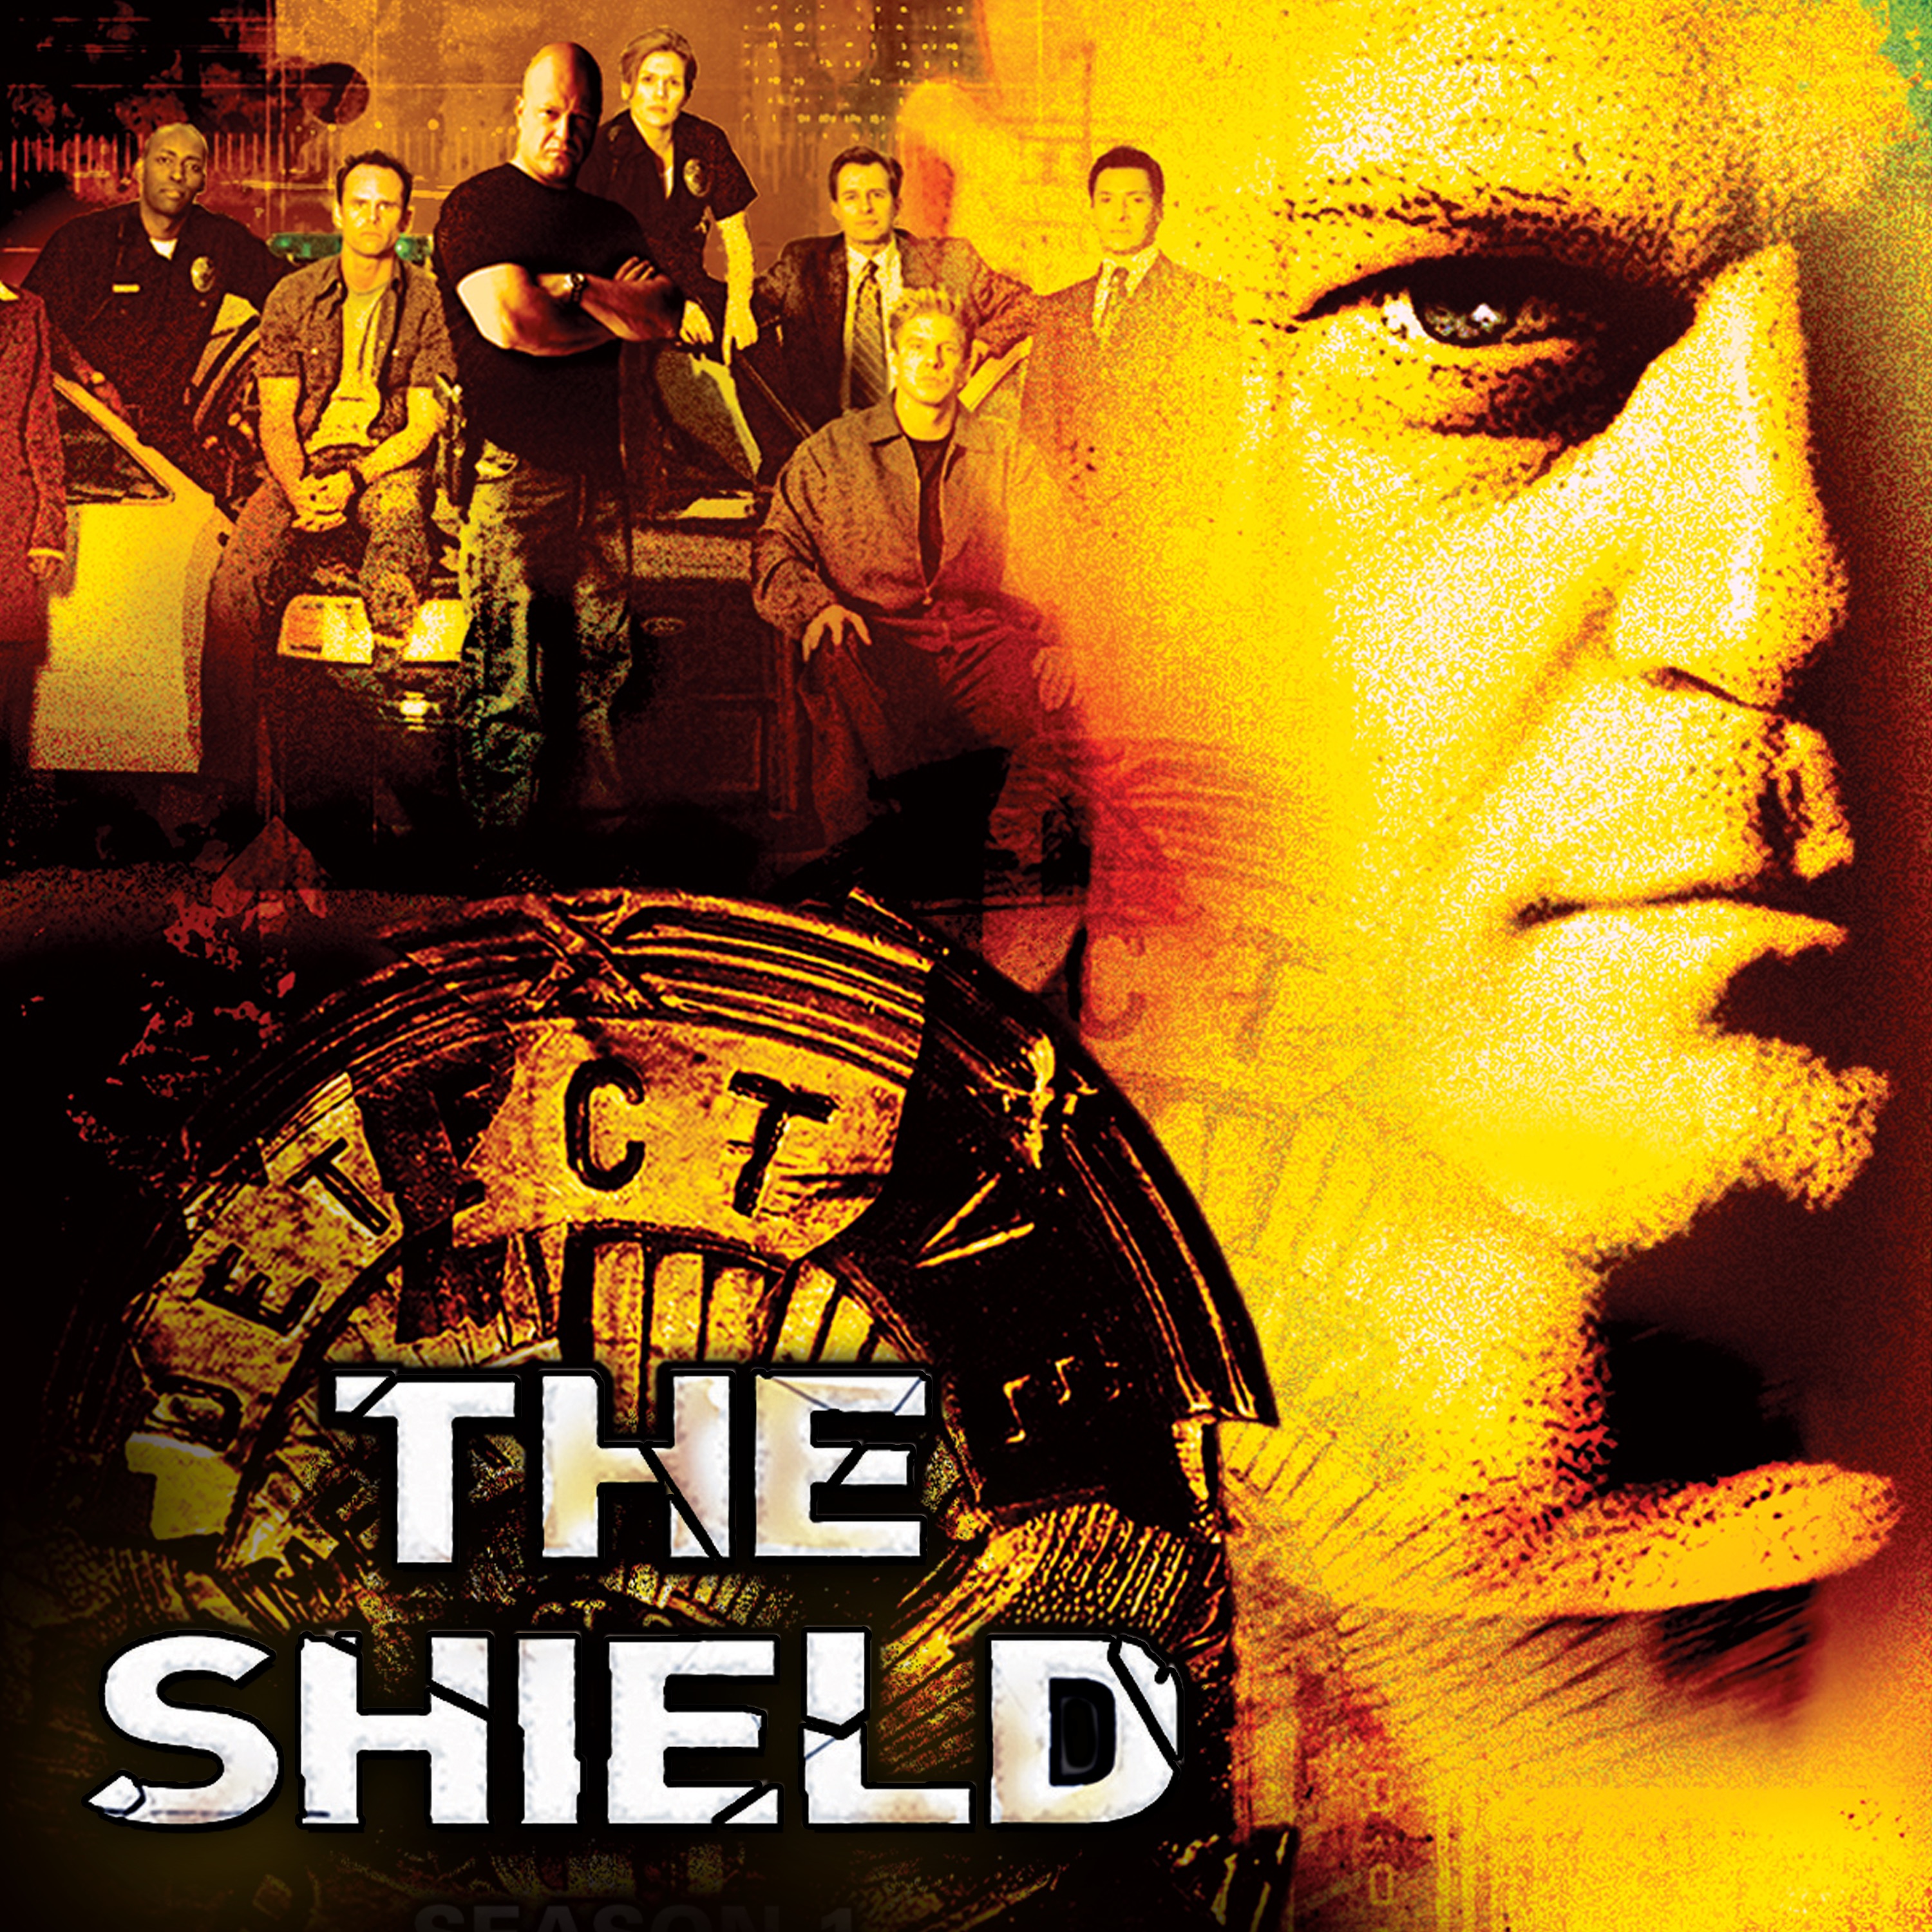 TVsubtitlesnet - Subtitles The Shield season 1